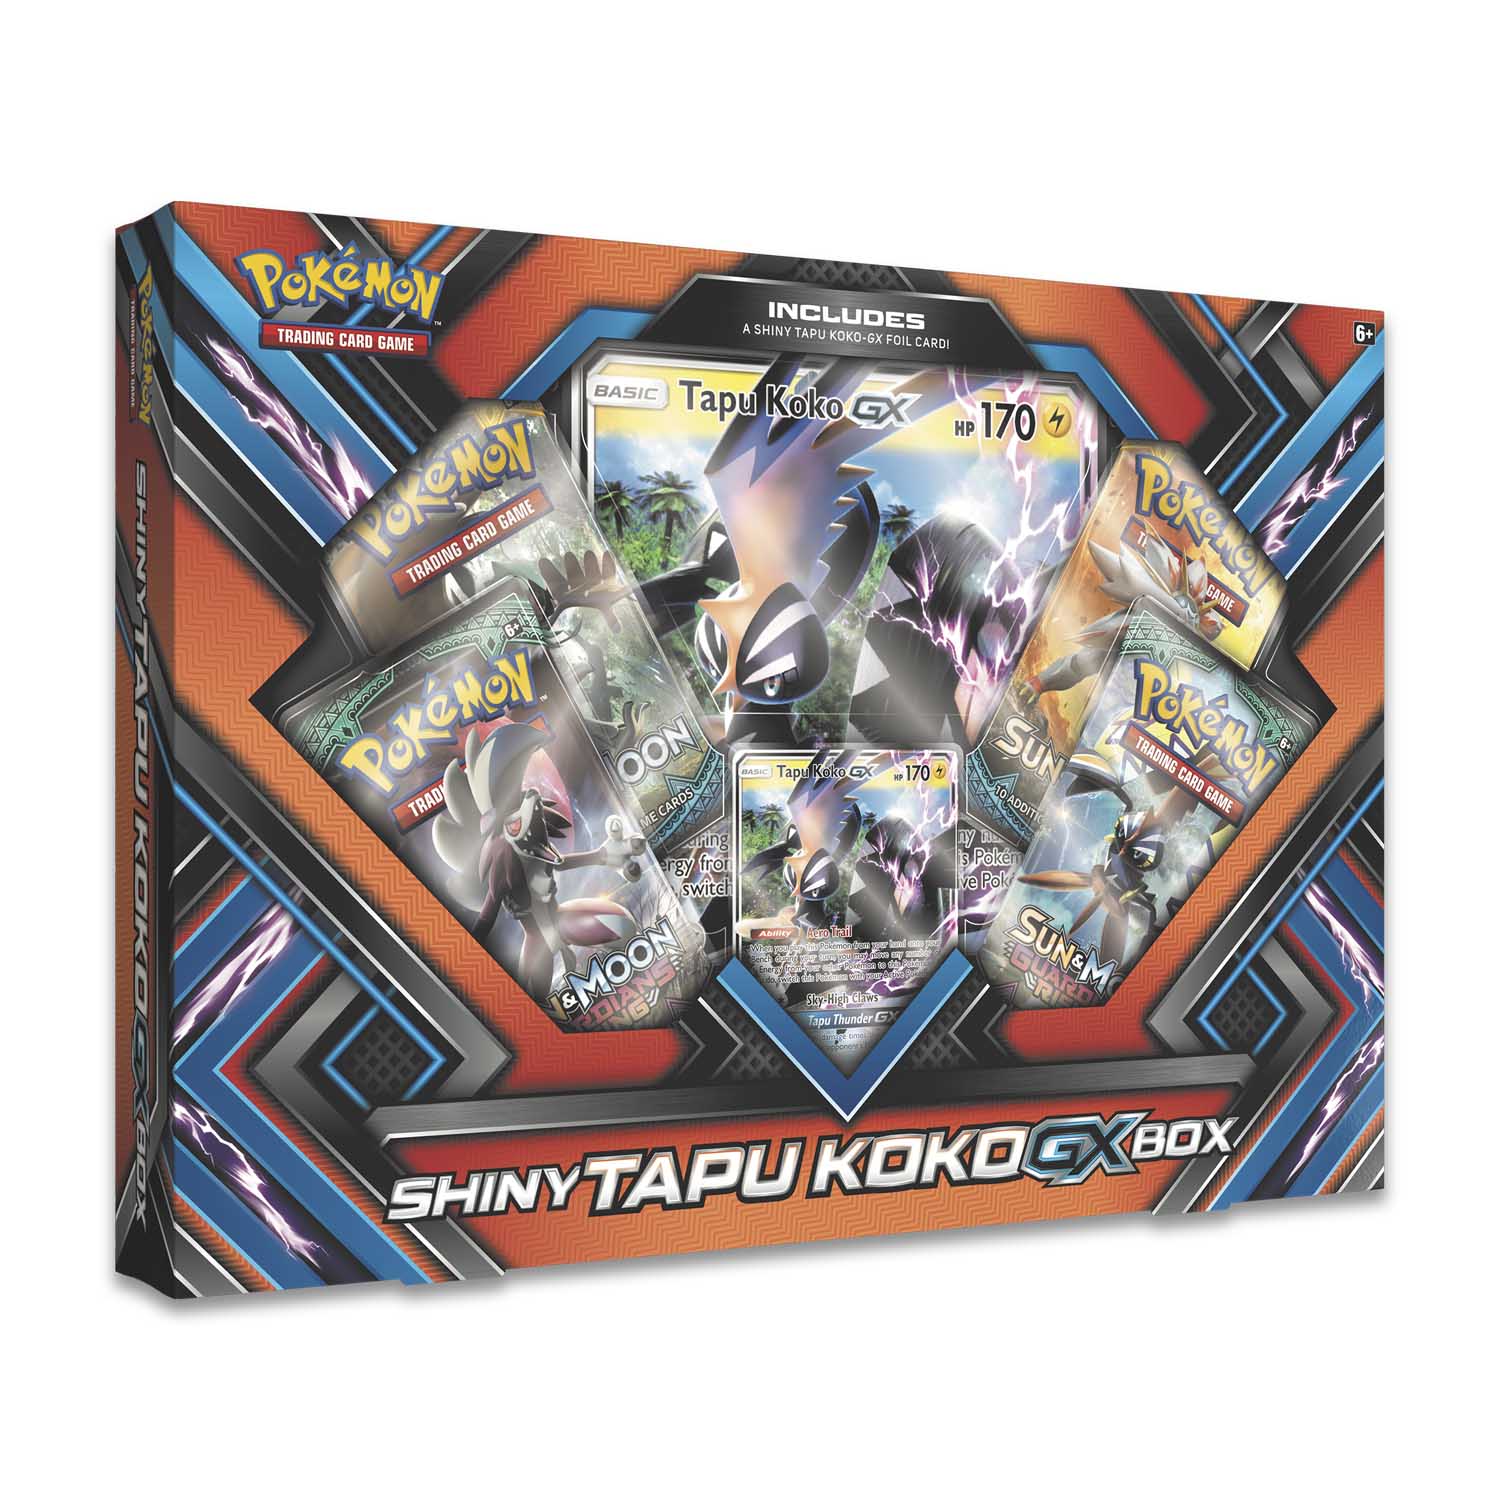 Promo Card Details about   Pokemon TCG Tapu Koko Box International Version 3 Booster Packs